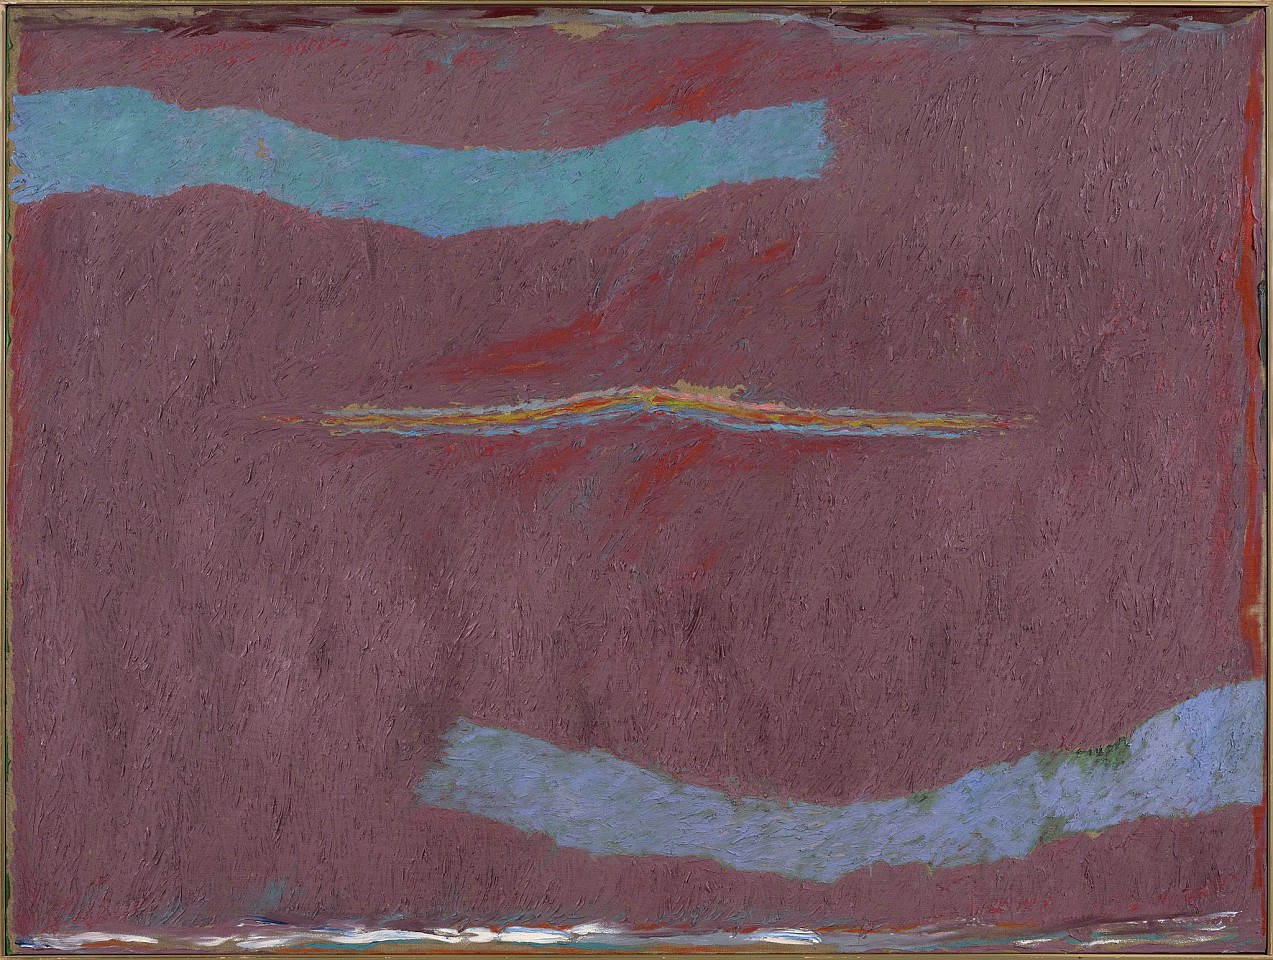 Stanley Boxer, Sultryfrost, 1973
Oil on linen, 54 x 74 in. (137.2 x 188 cm)
BOX-00122